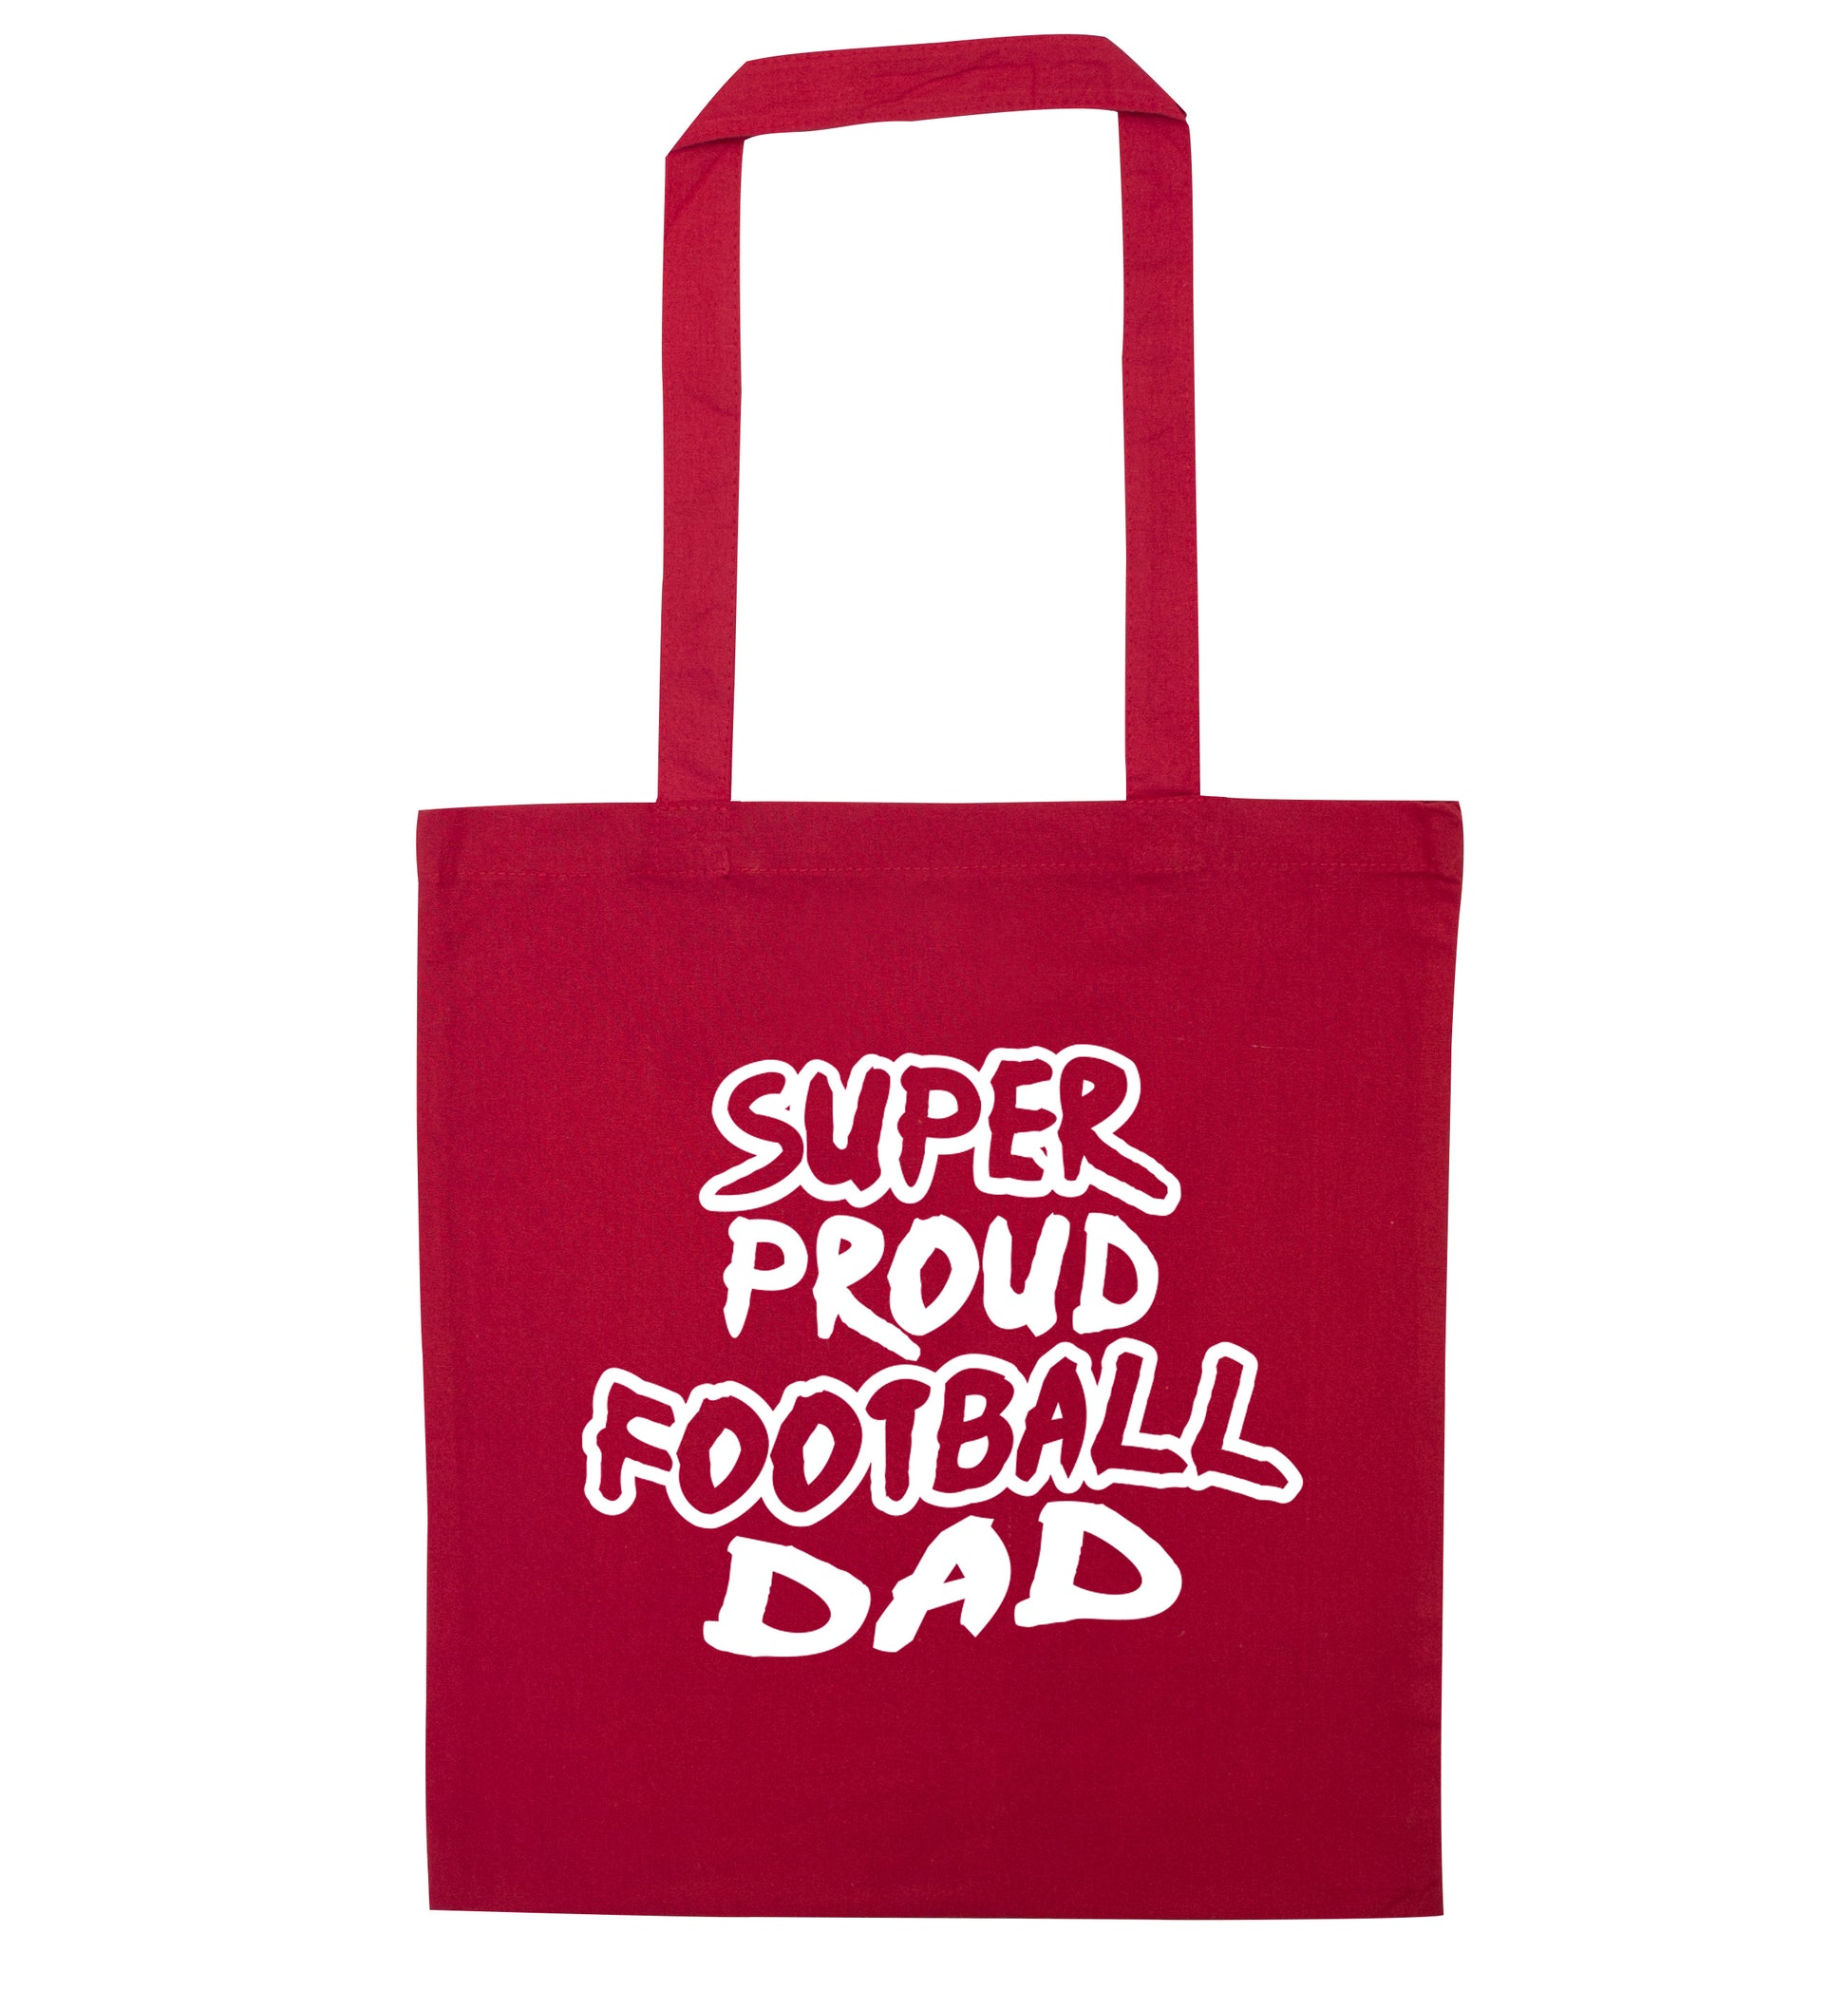 Super proud football dad red tote bag